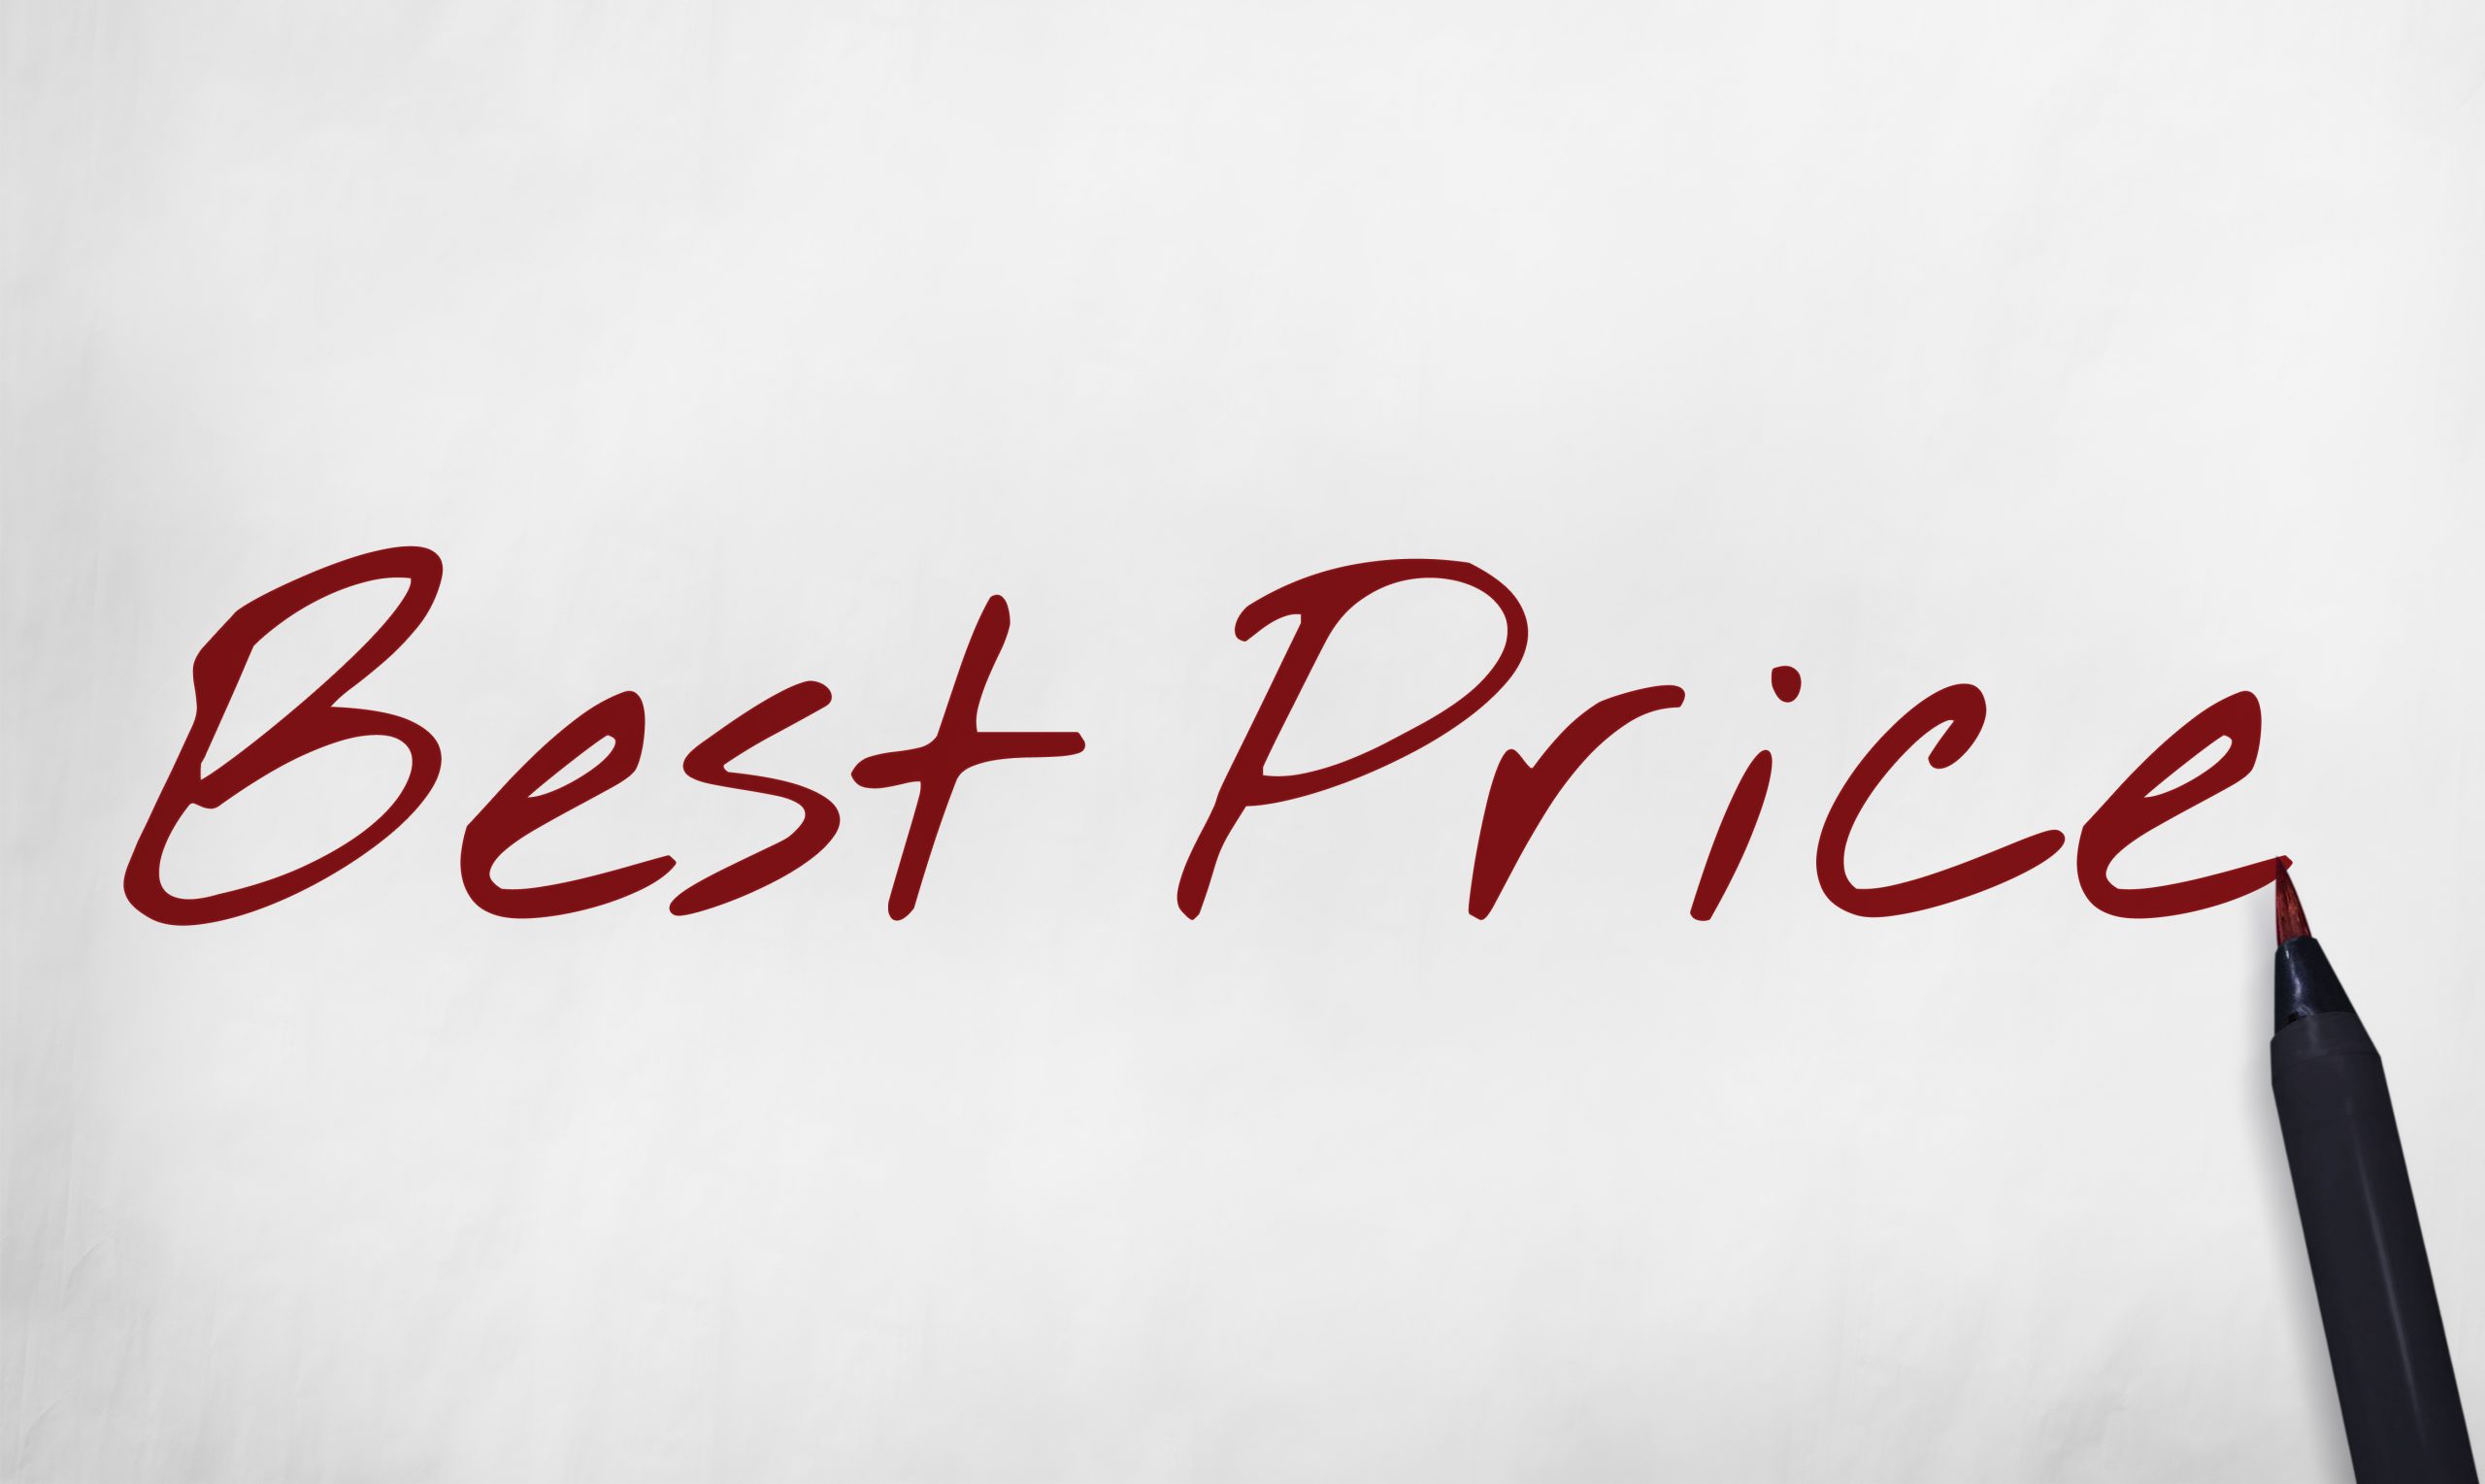 Price marketing